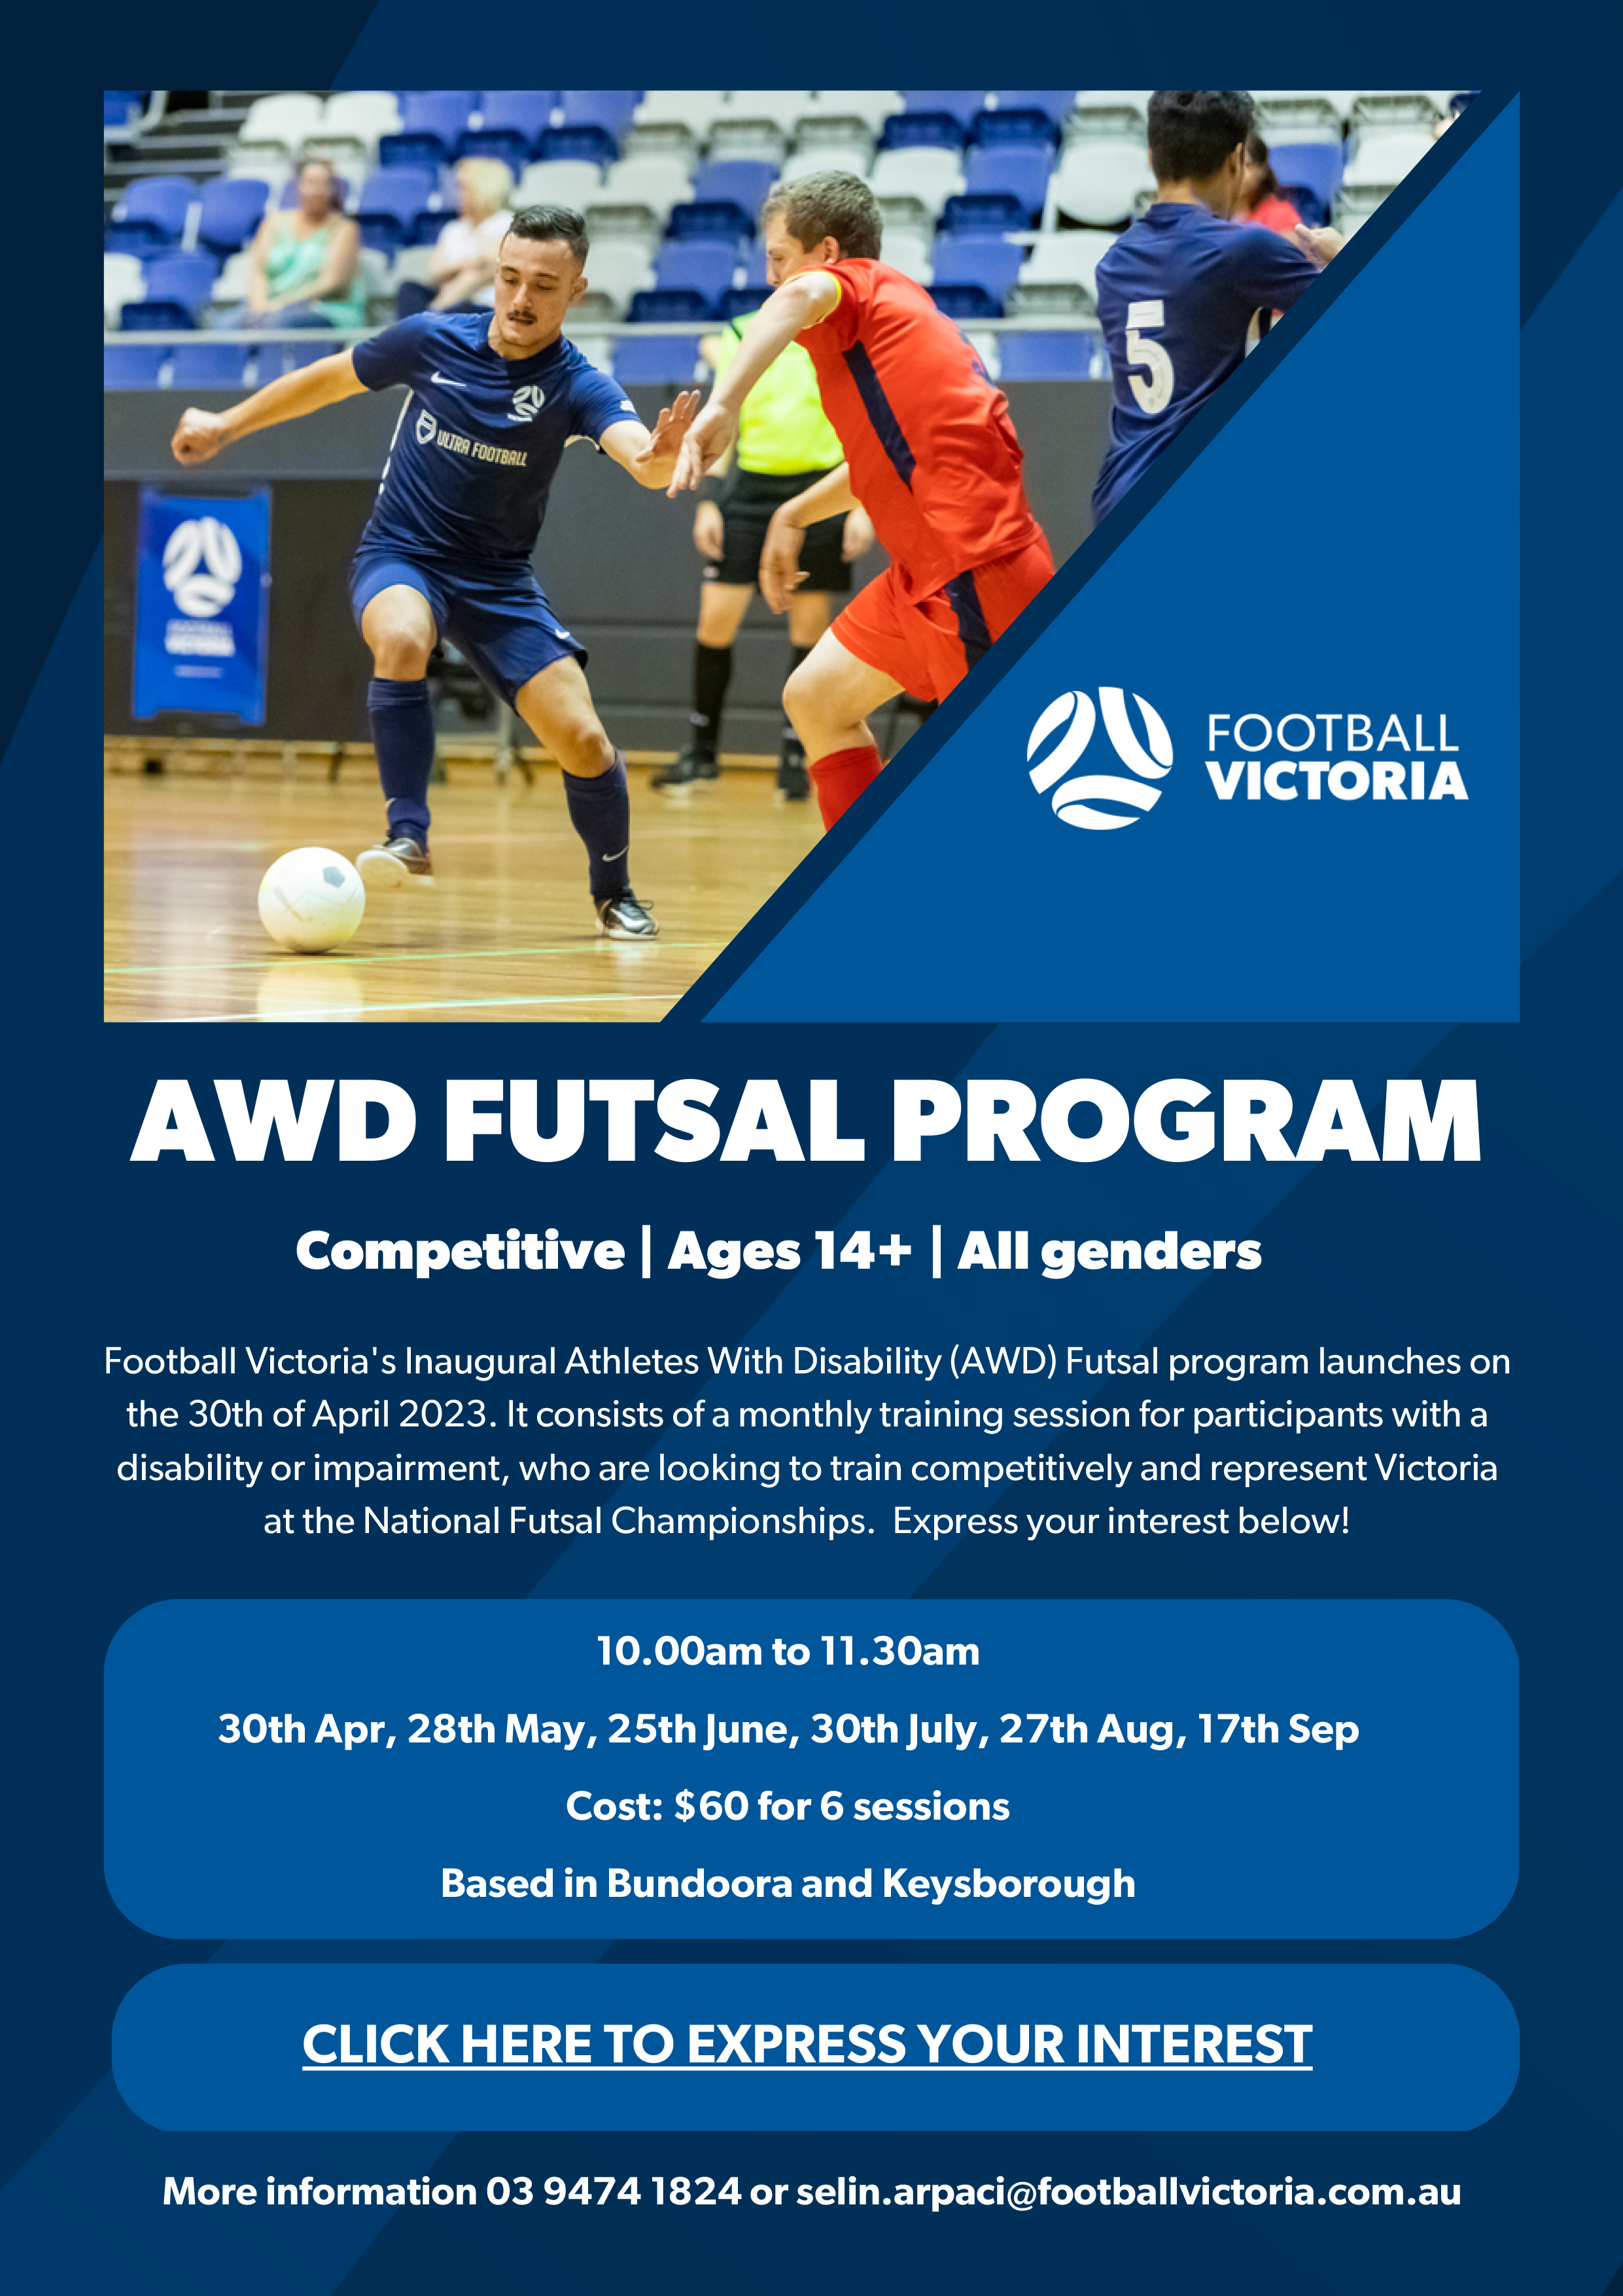 AWD Futsal Program Flyer with location, cost, date